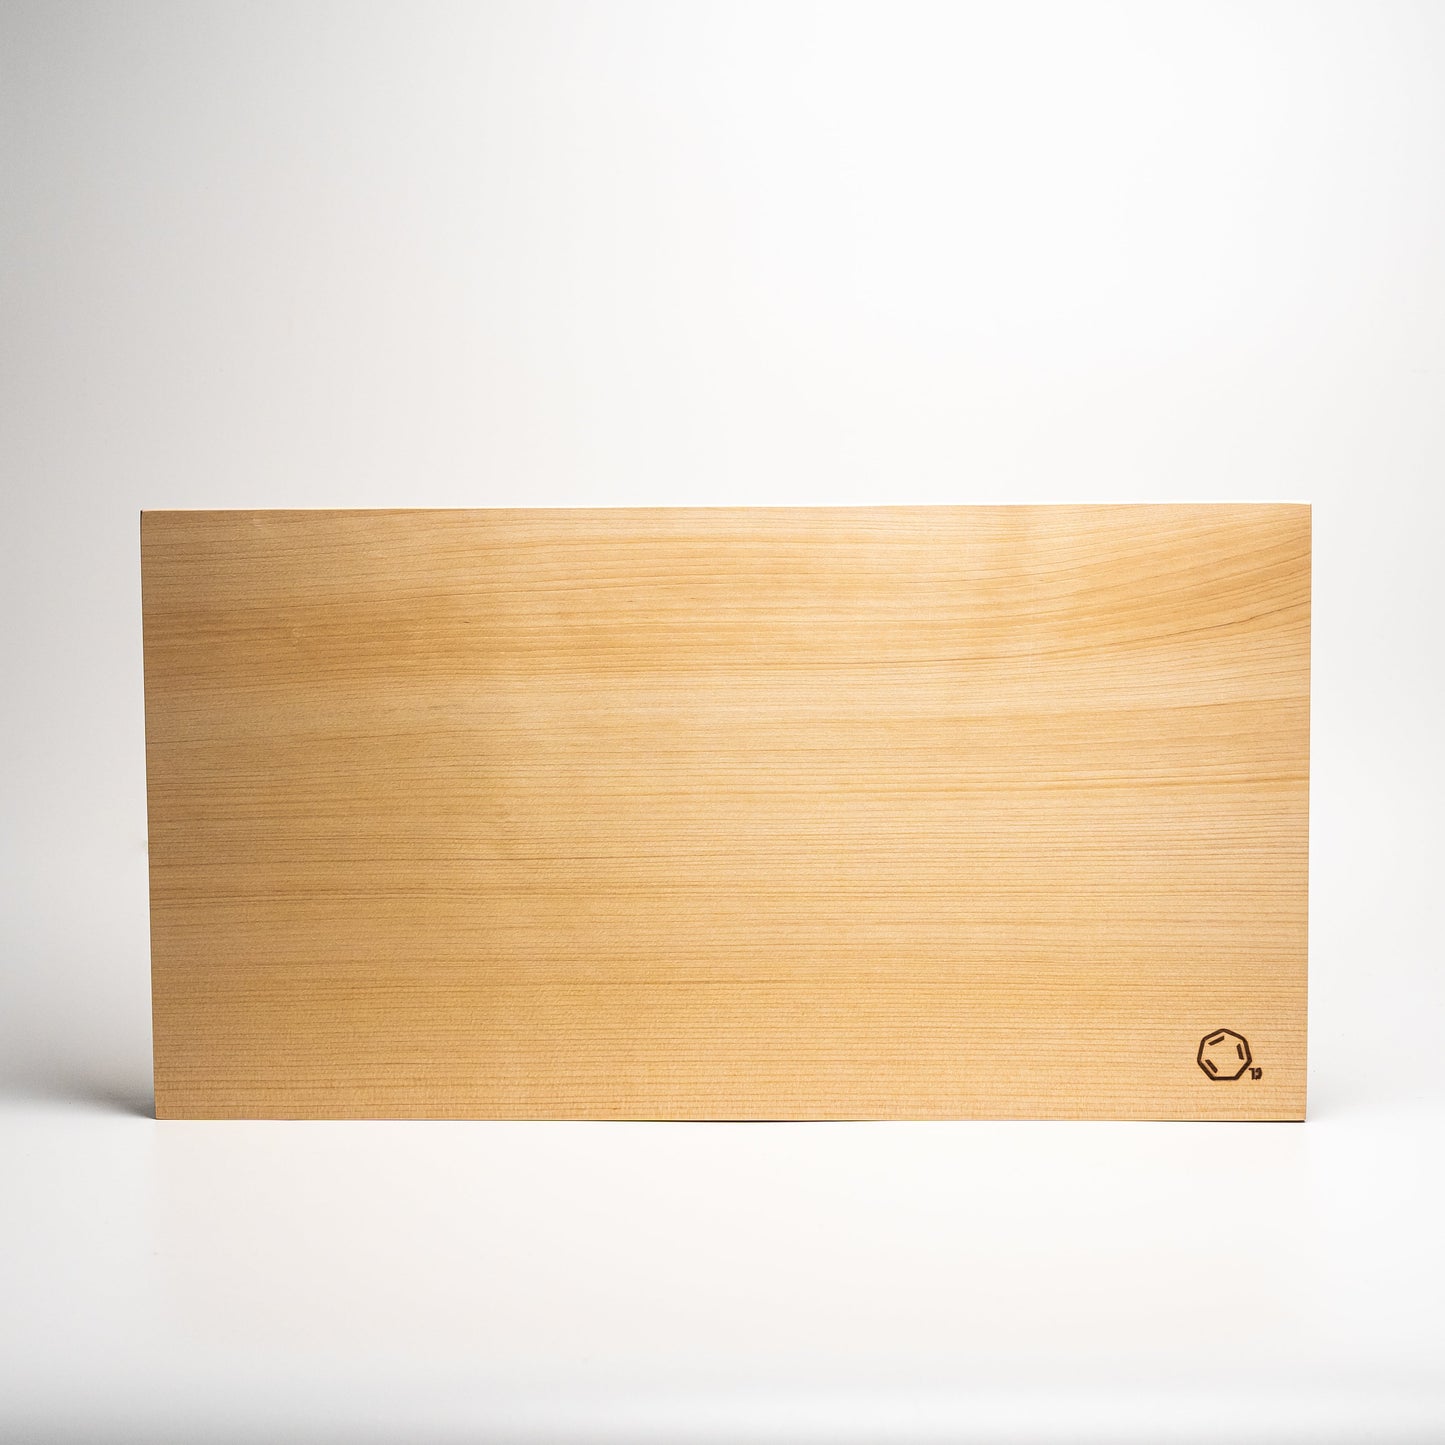 Large Cul de Sac hiba wood chopping board on a white background